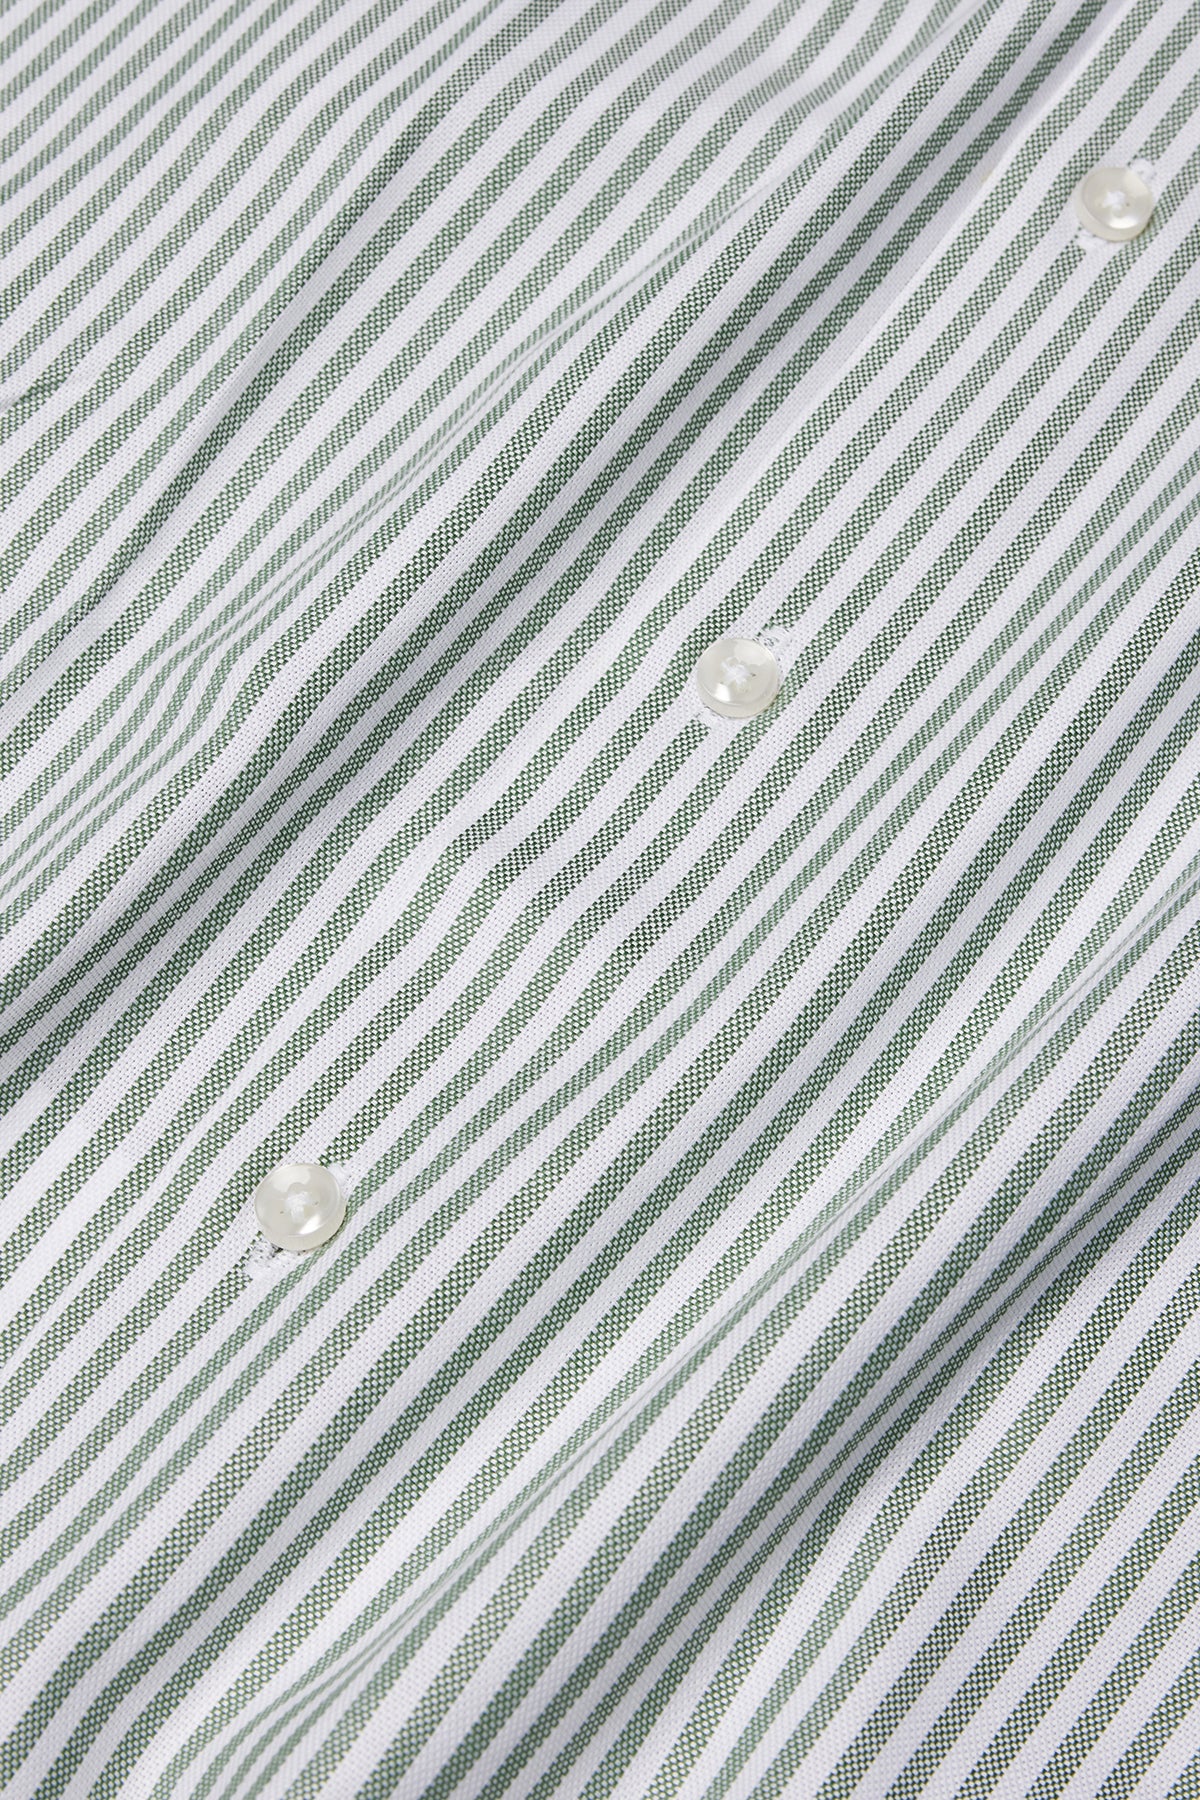 Green Striped Spread Collar Shirt